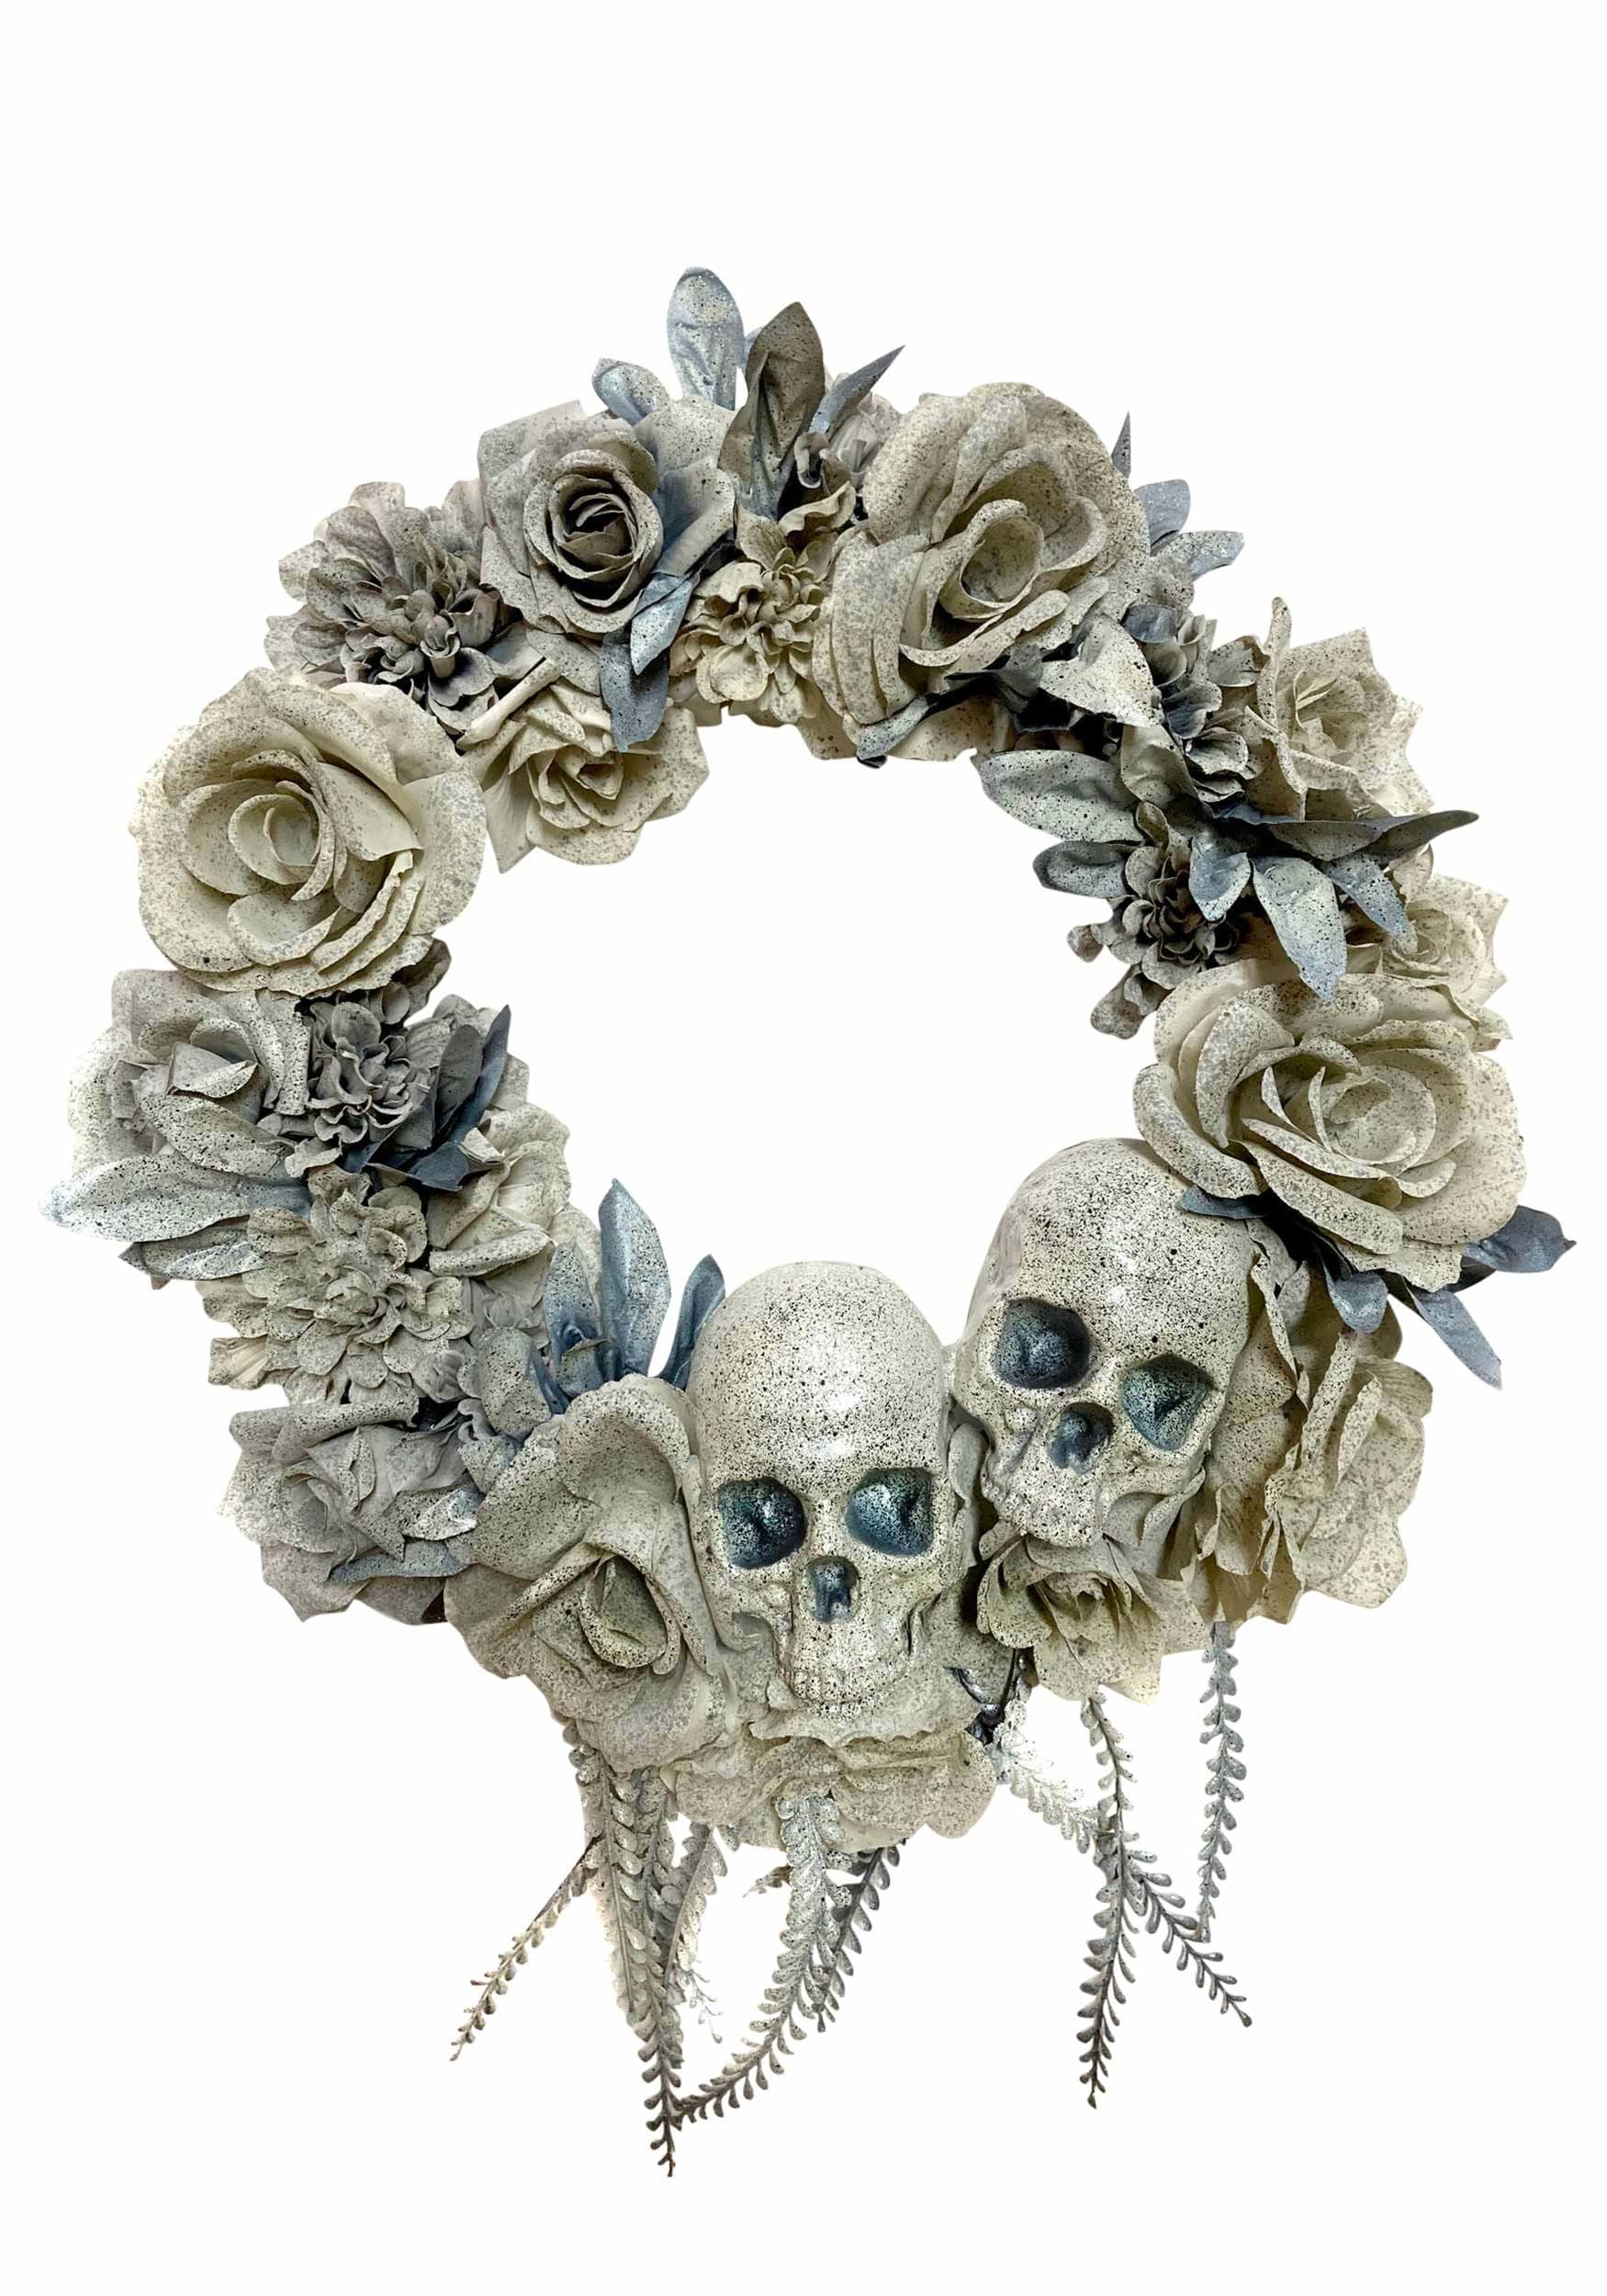 20" Faux Stone Skull & Roses Wreath Decoration | Halloween Wreath